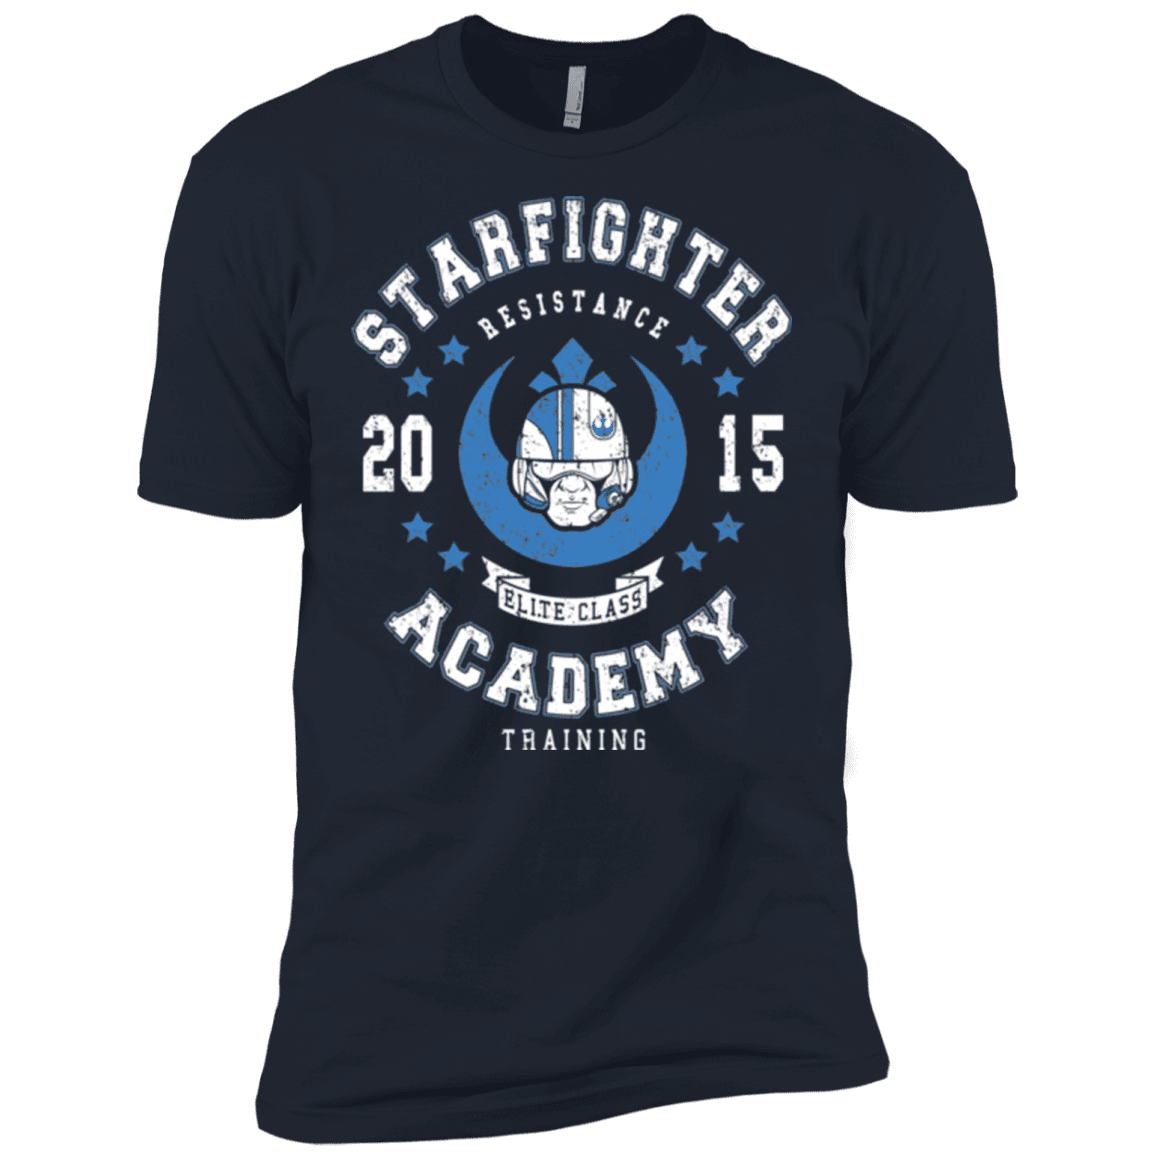 T-Shirts Midnight Navy / X-Small Starfighter Academy 15 Men's Premium T-Shirt